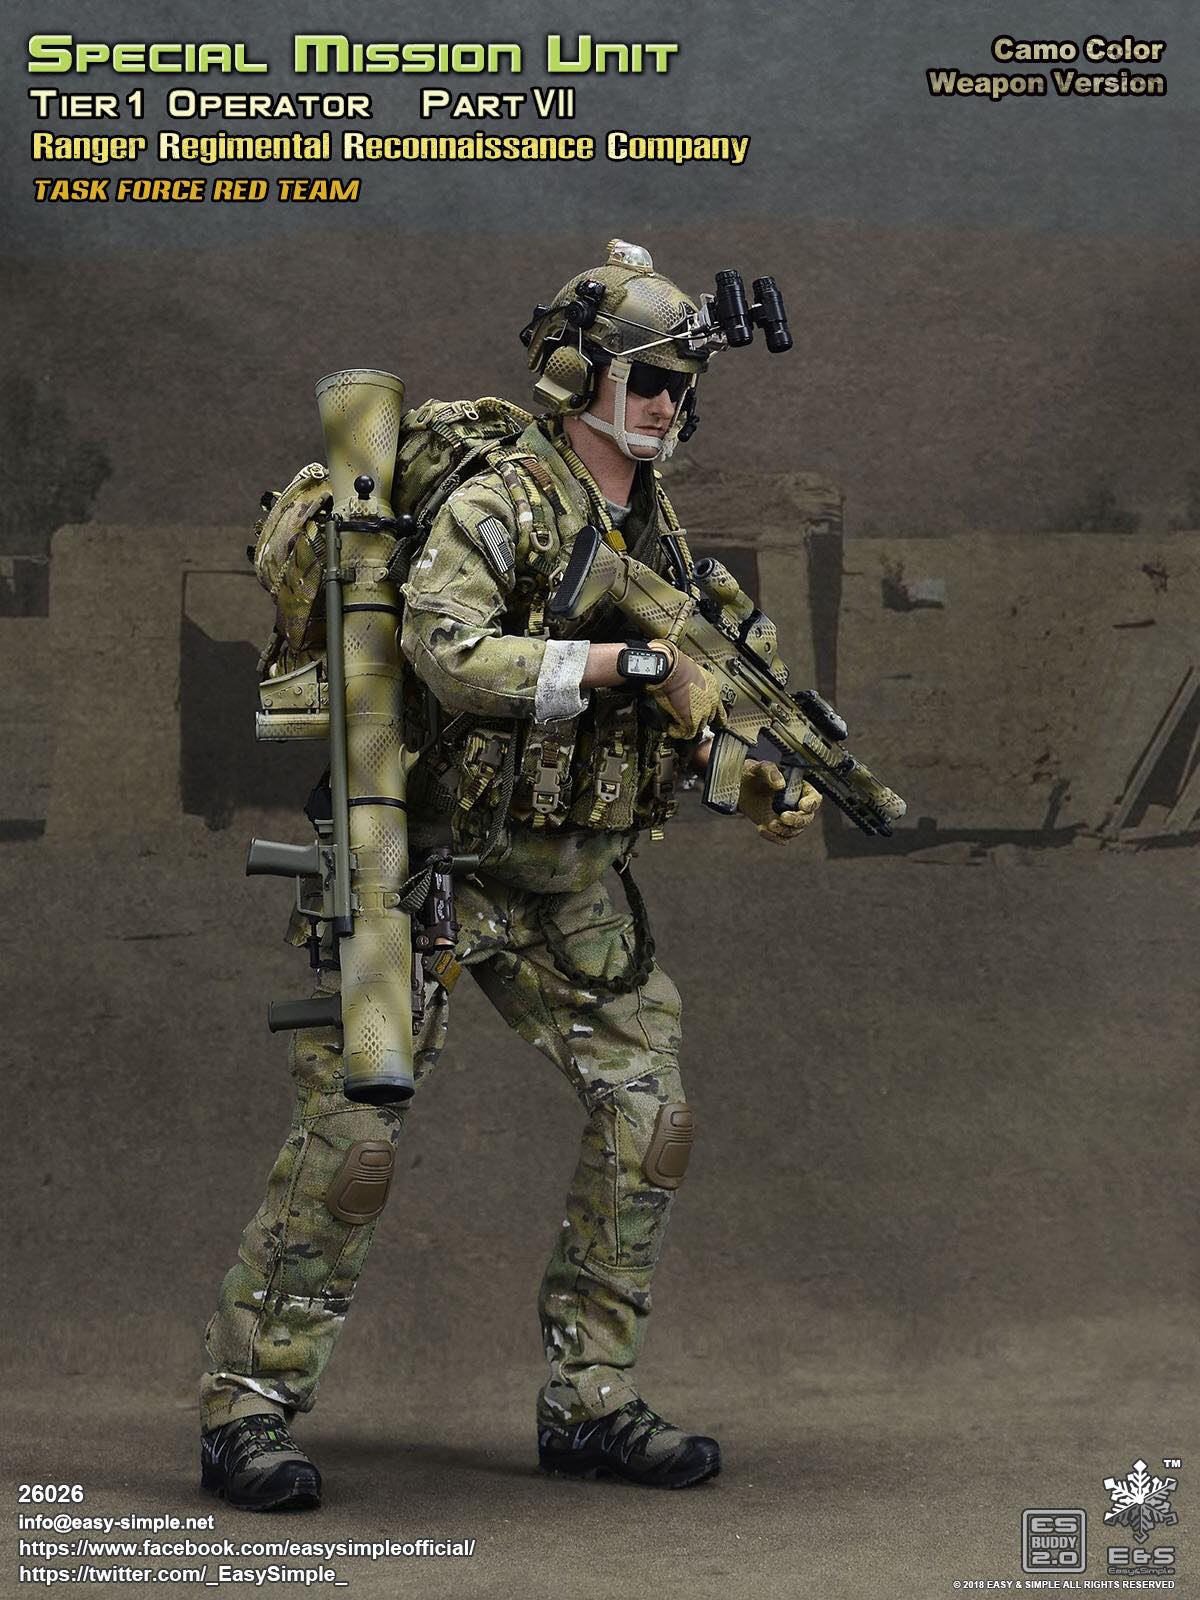 Easy &amp; Simple - 26026 - Special Mission Unit Tier-1 Operator Part VII - Ranger Regimental Reconnaissance Company (Camo Color Weapon) - Marvelous Toys